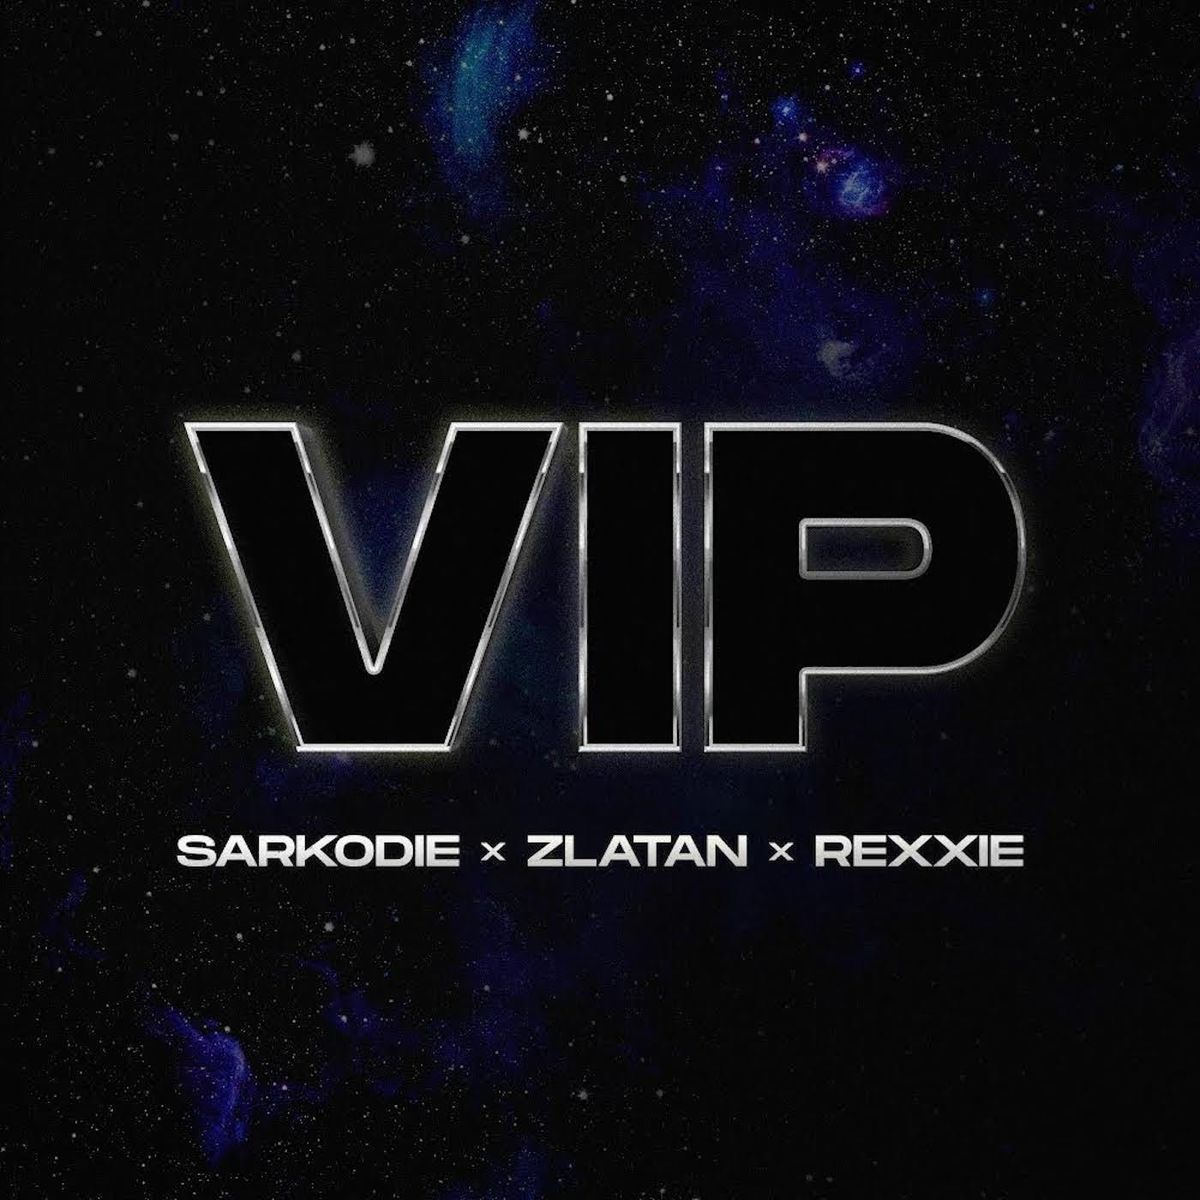 Sarkodie - VIP ft. Zlatan & Rexxie (Prod by Rexxie)